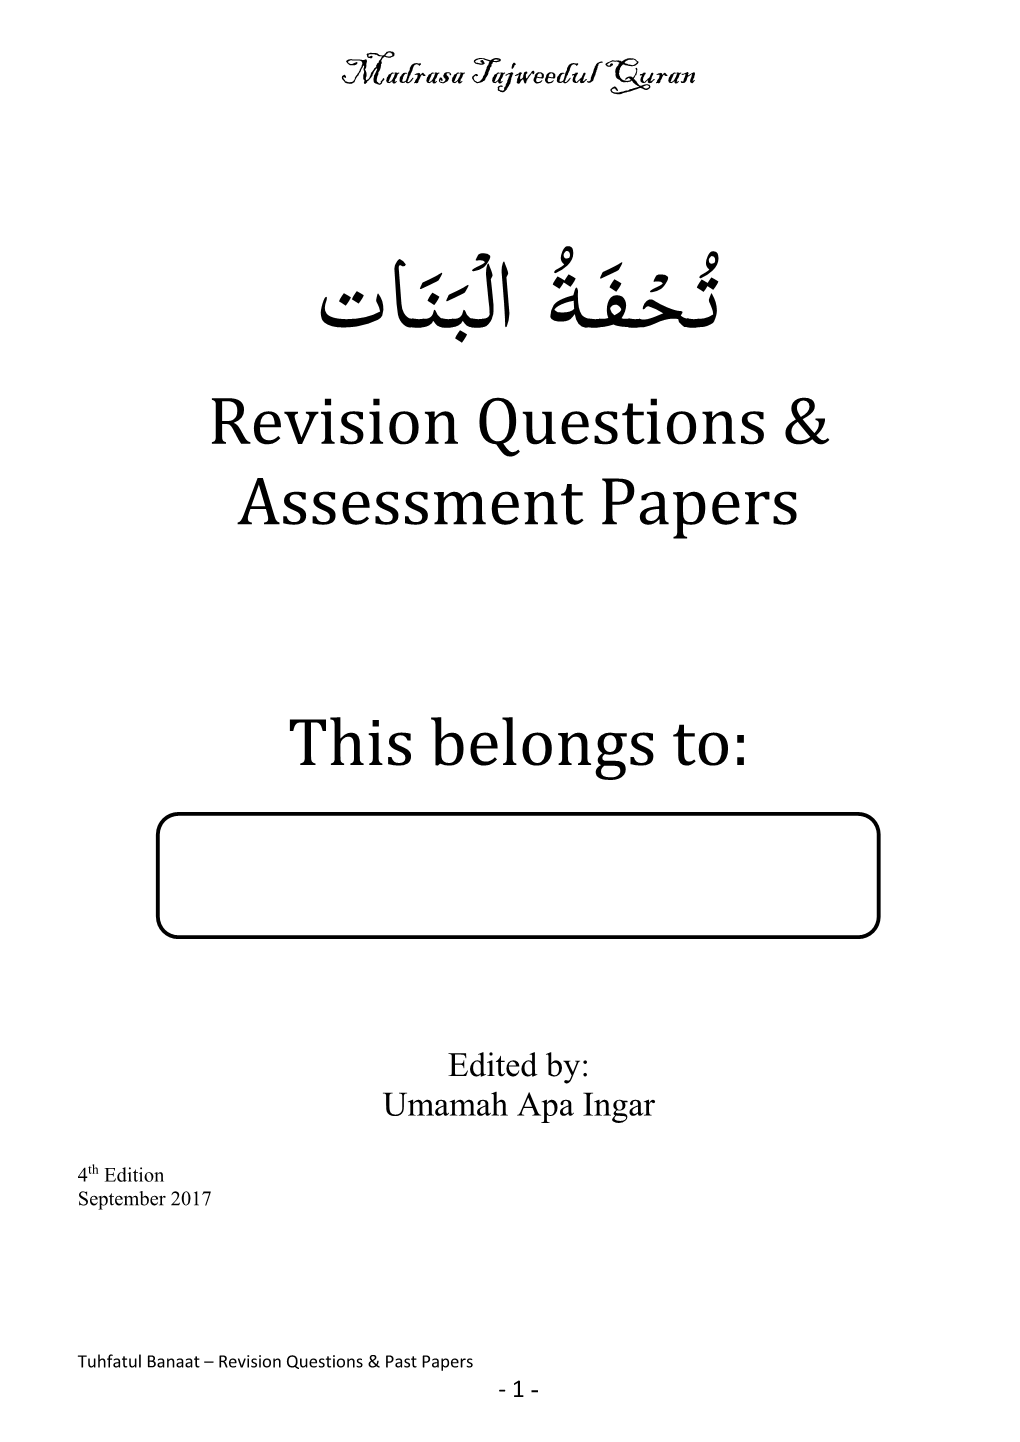 Tuhfatul Banaat Revision Questions